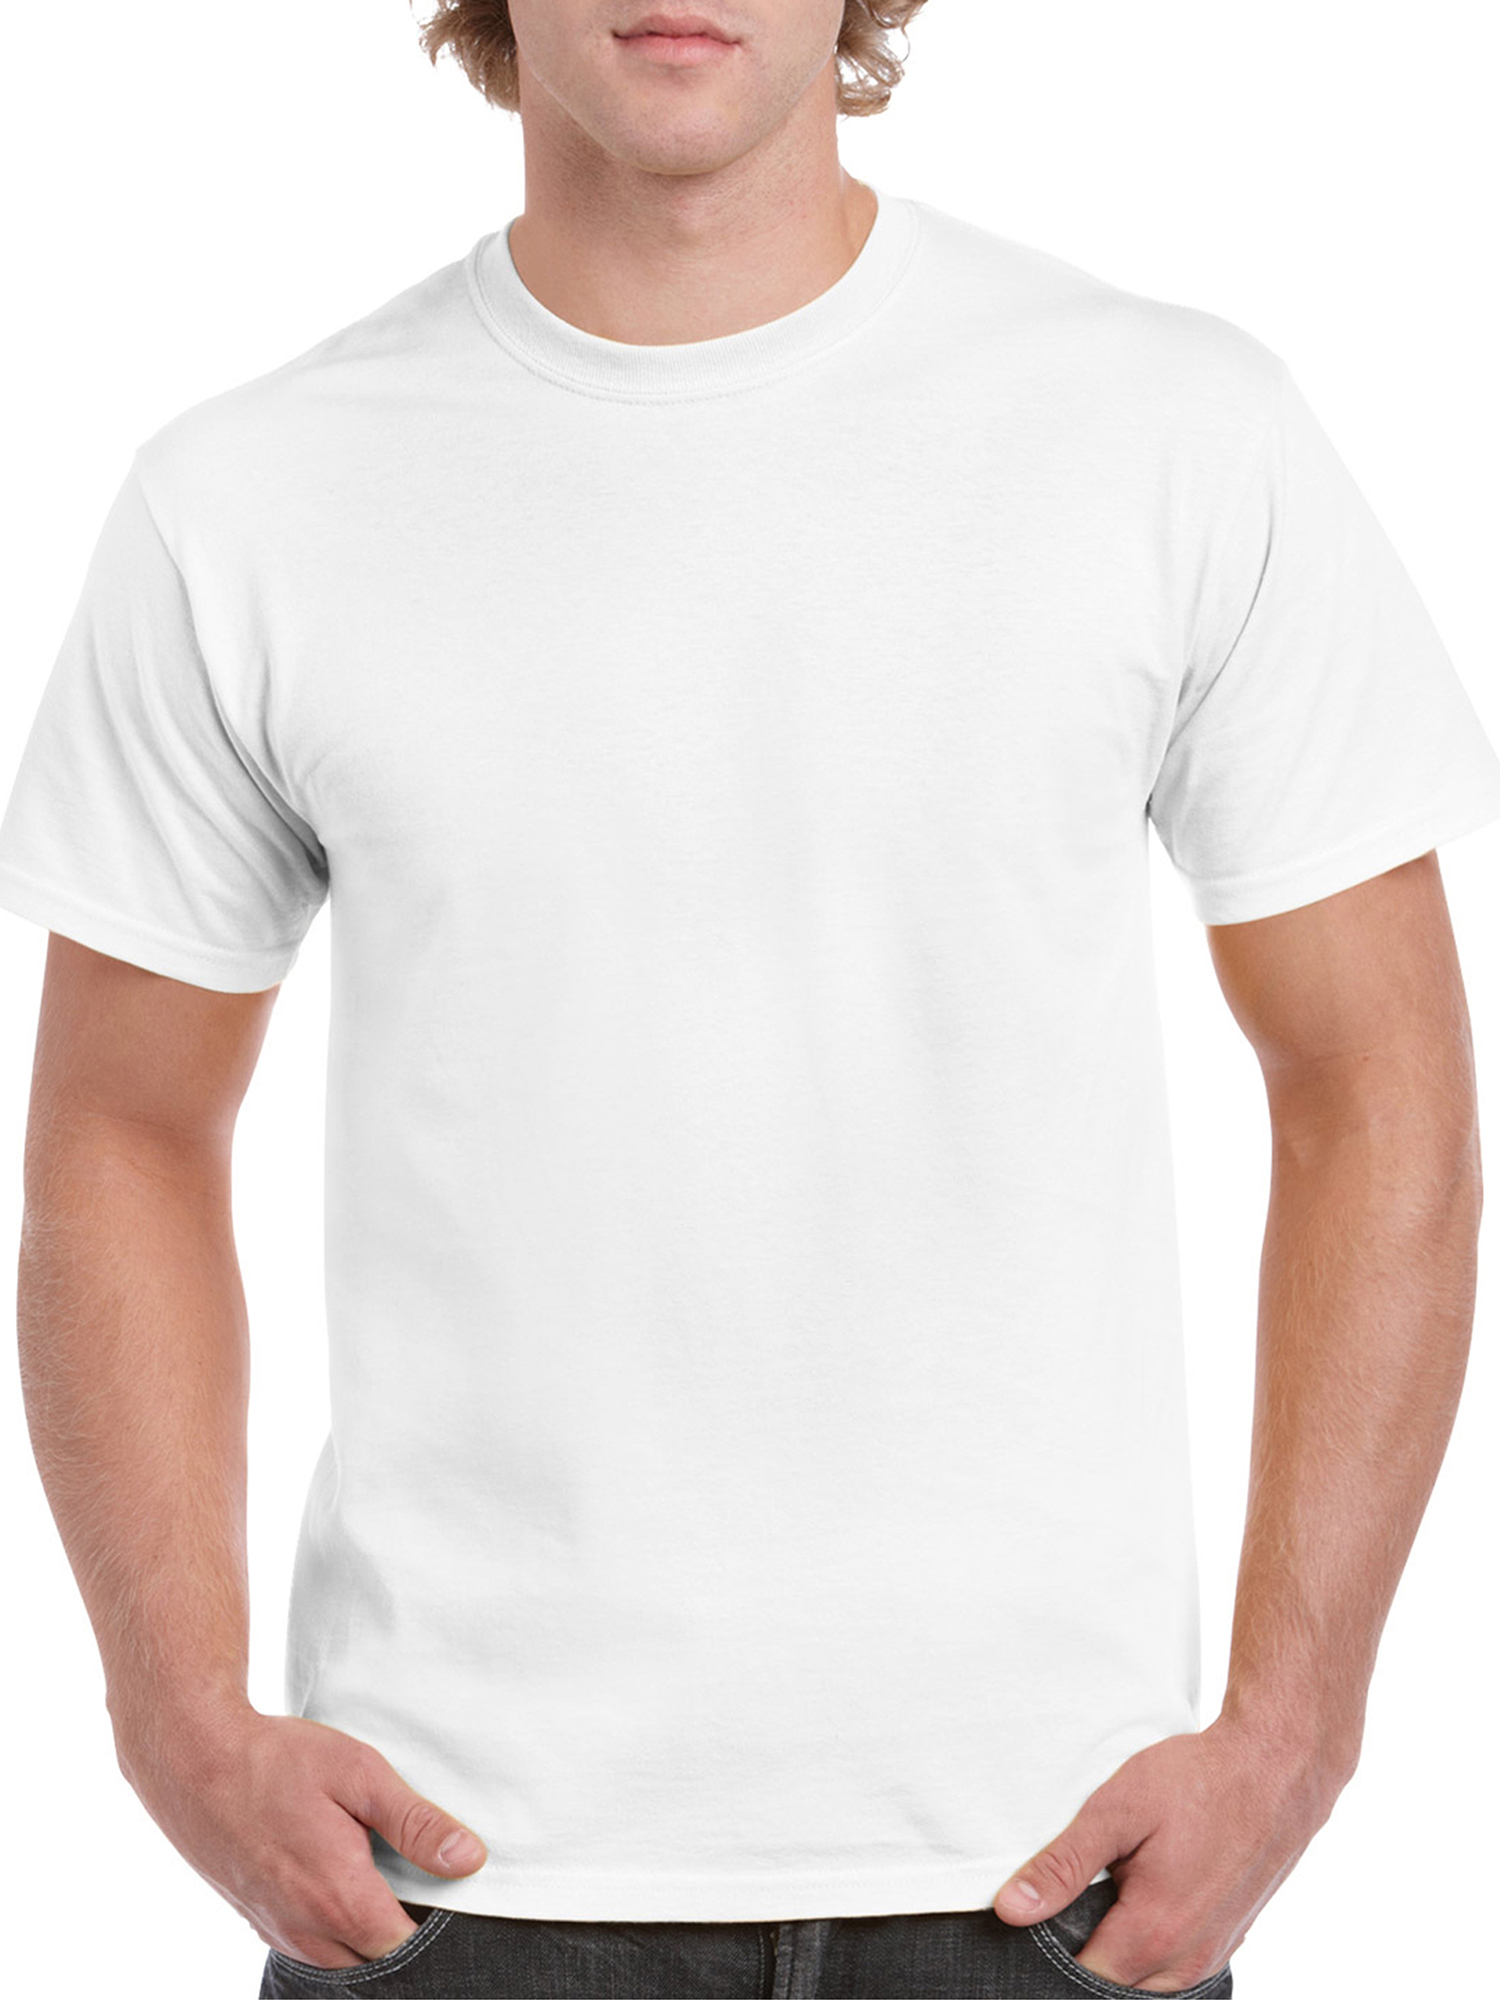 Gildan Men Cotton Short Sleeve White Crew T-Shirt, 4-Pack, Large - image 4 of 9